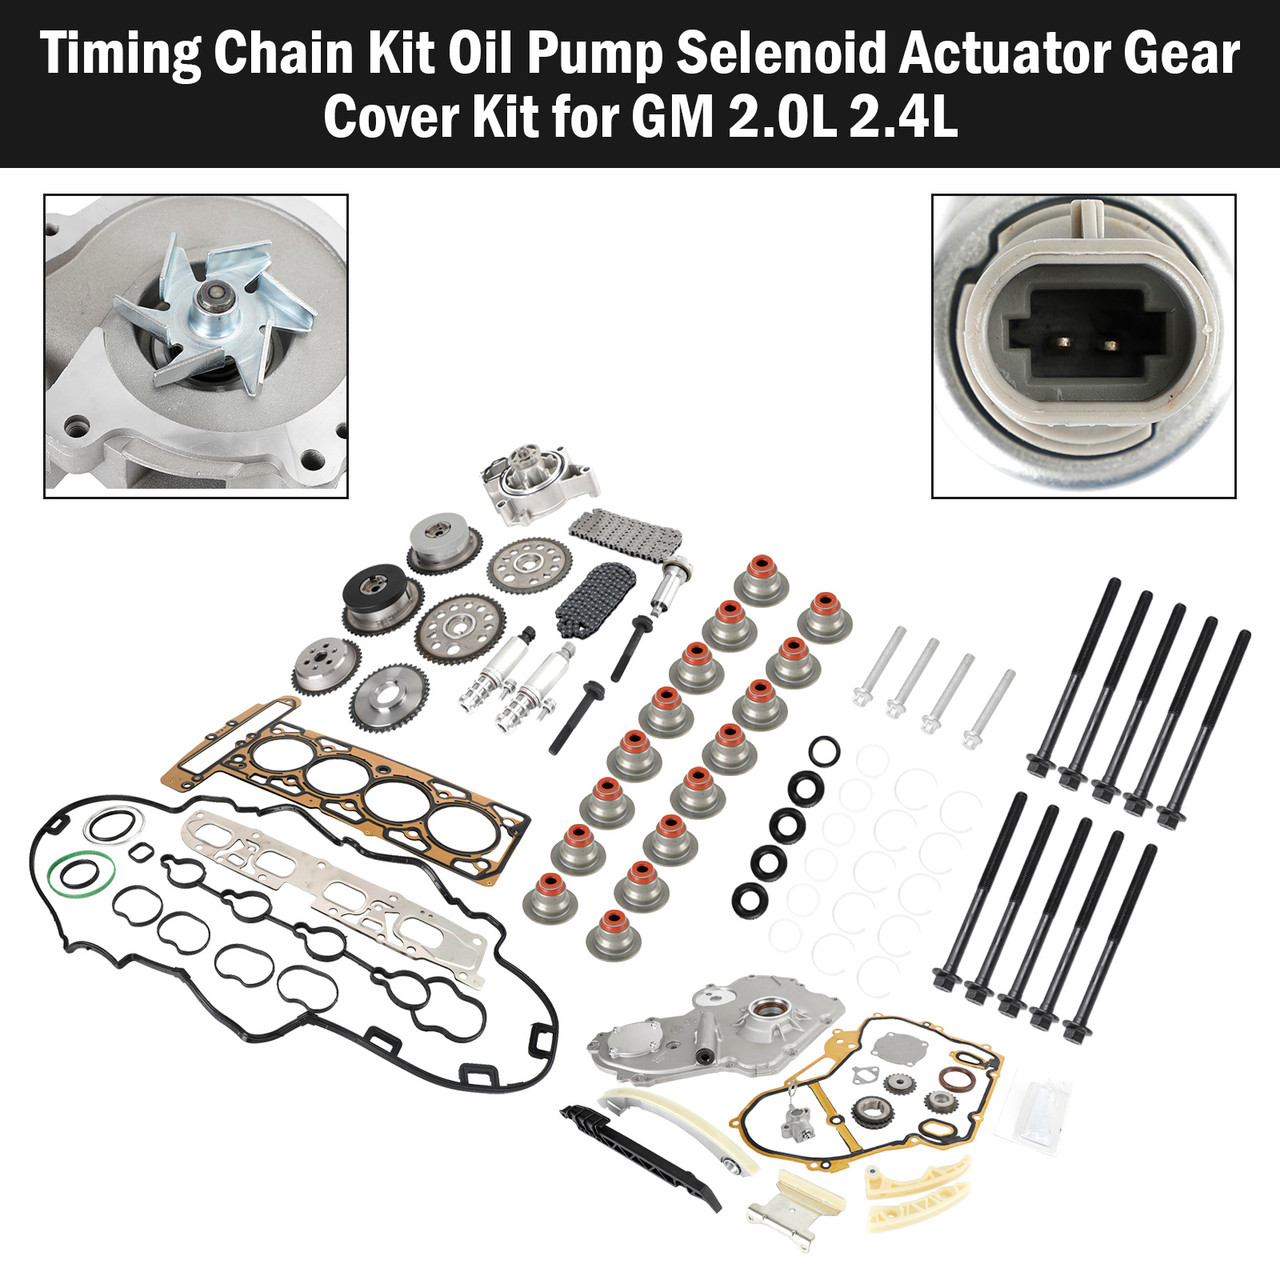 2010 PONTIAC G6 2.4L Timing Chain Kit Oil Pump Selenoid Actuator Gear Cover Kit